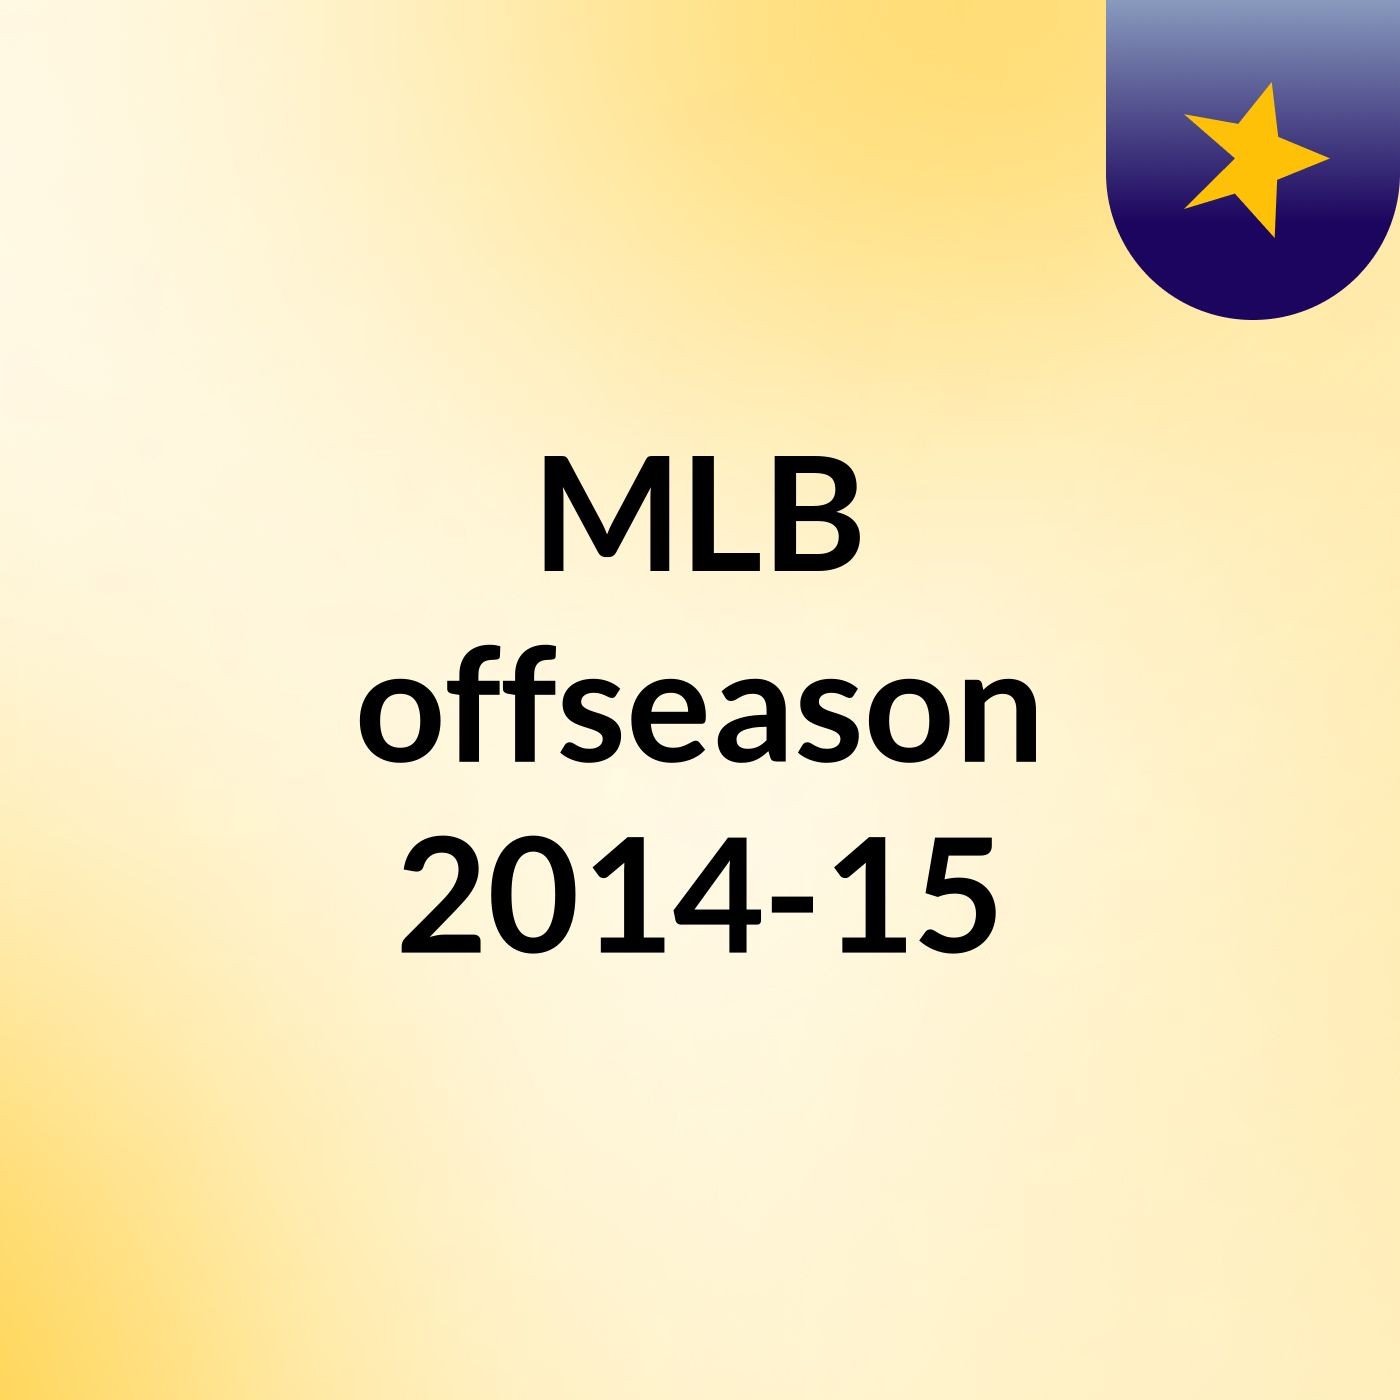 MLB offseason 2014-15